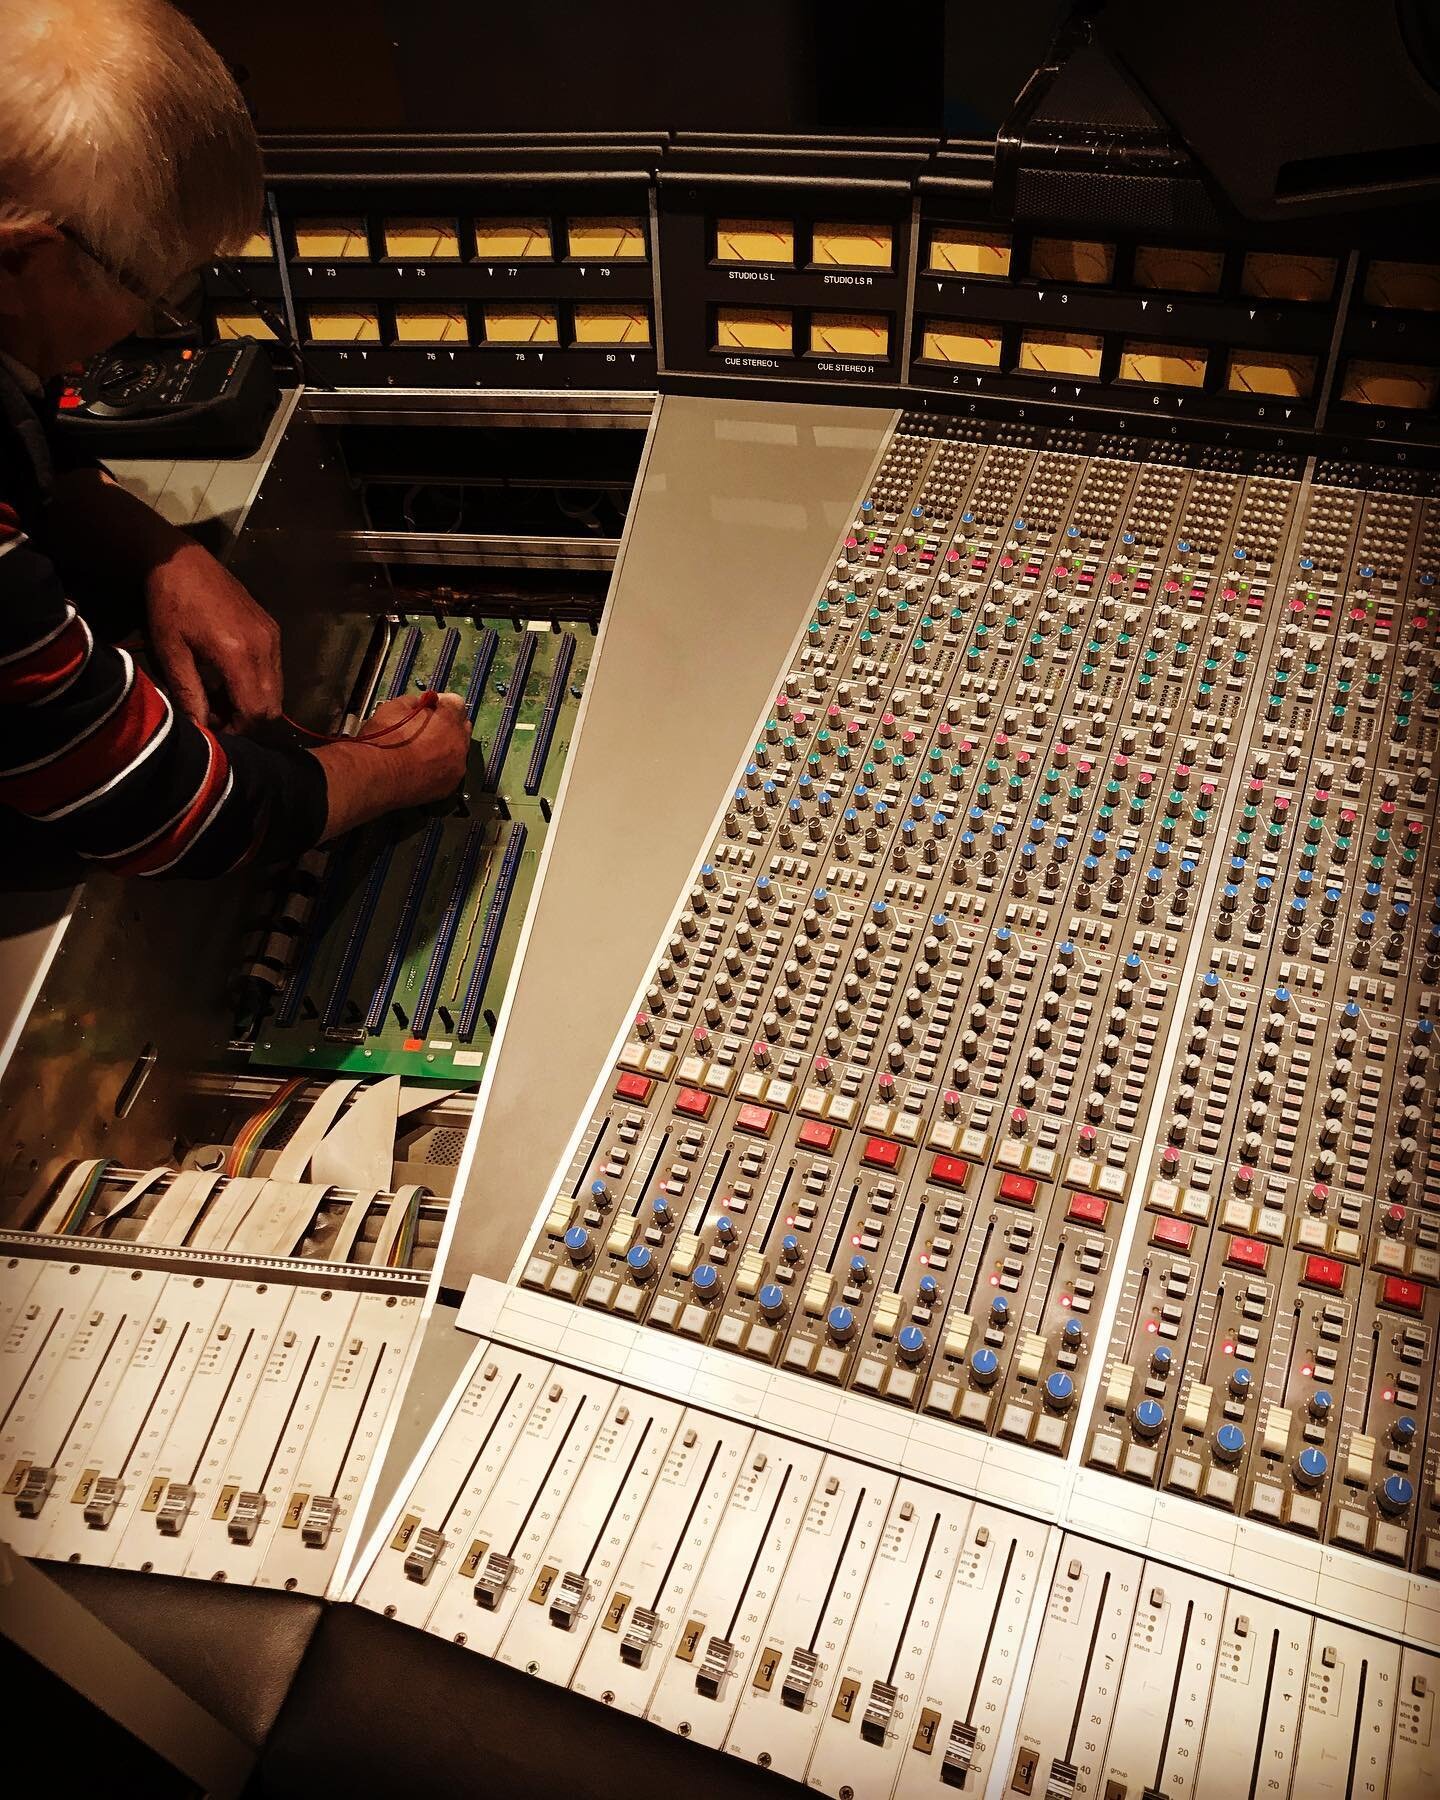 SSL TLC 🛠🪛🧰 George Guilbert showing our G series some love
.
.
.

#studio #recording #recordingstudio #studiorecording #ssl #sslgseries #analogue #analoguerecording #engineering